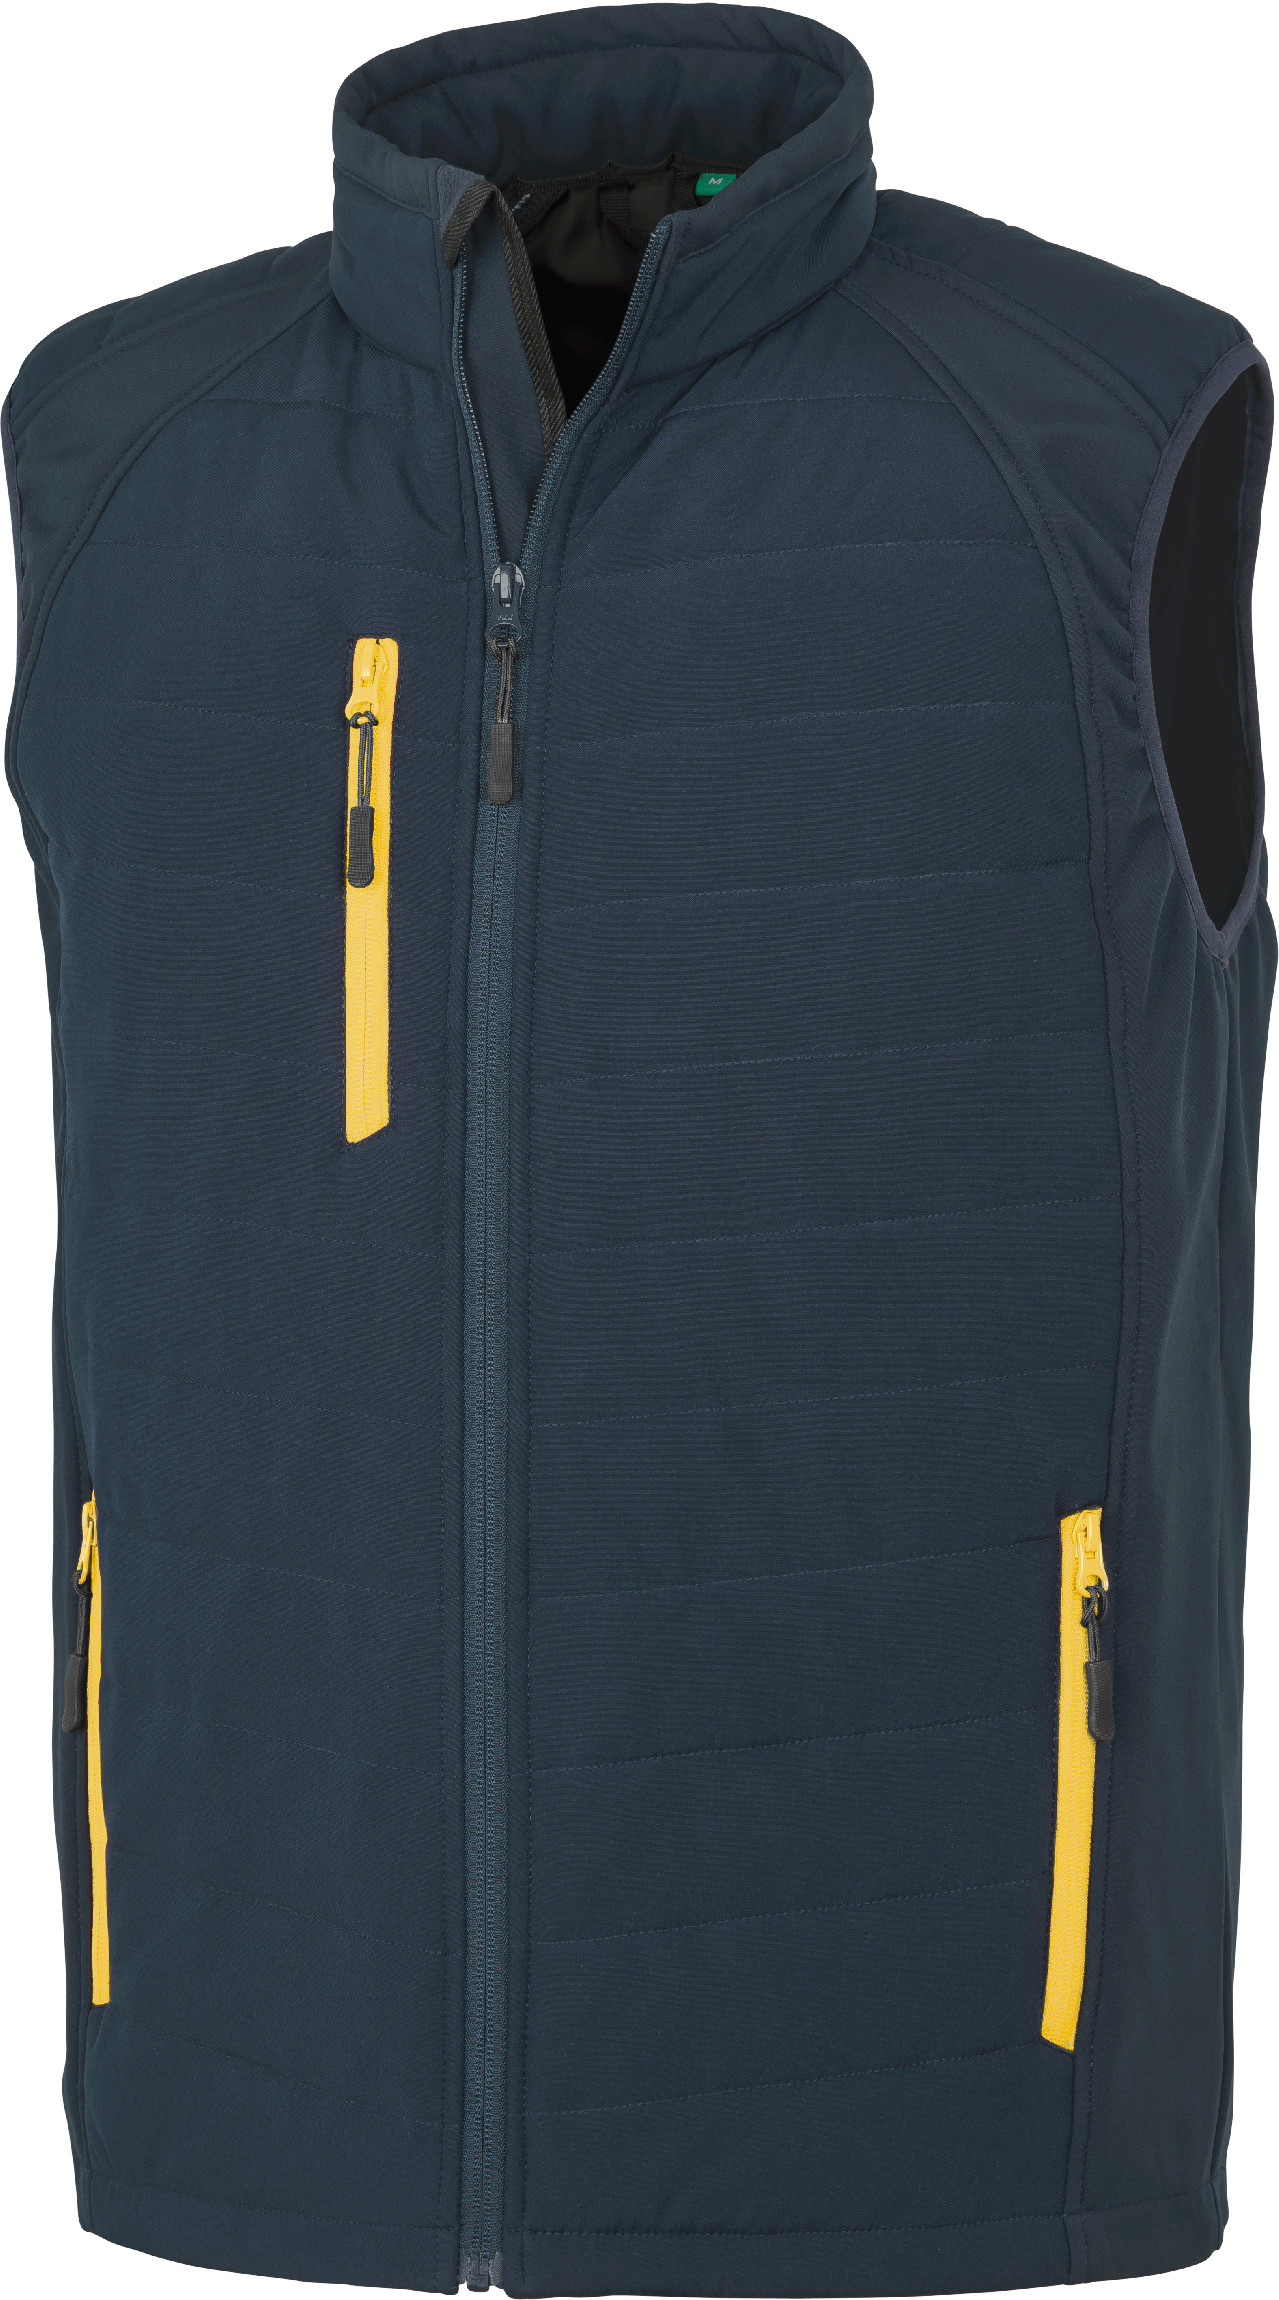 Polstrovaná softshell vesta Compass R238X Barva: námořní modrá-žlutá, Velikost: M